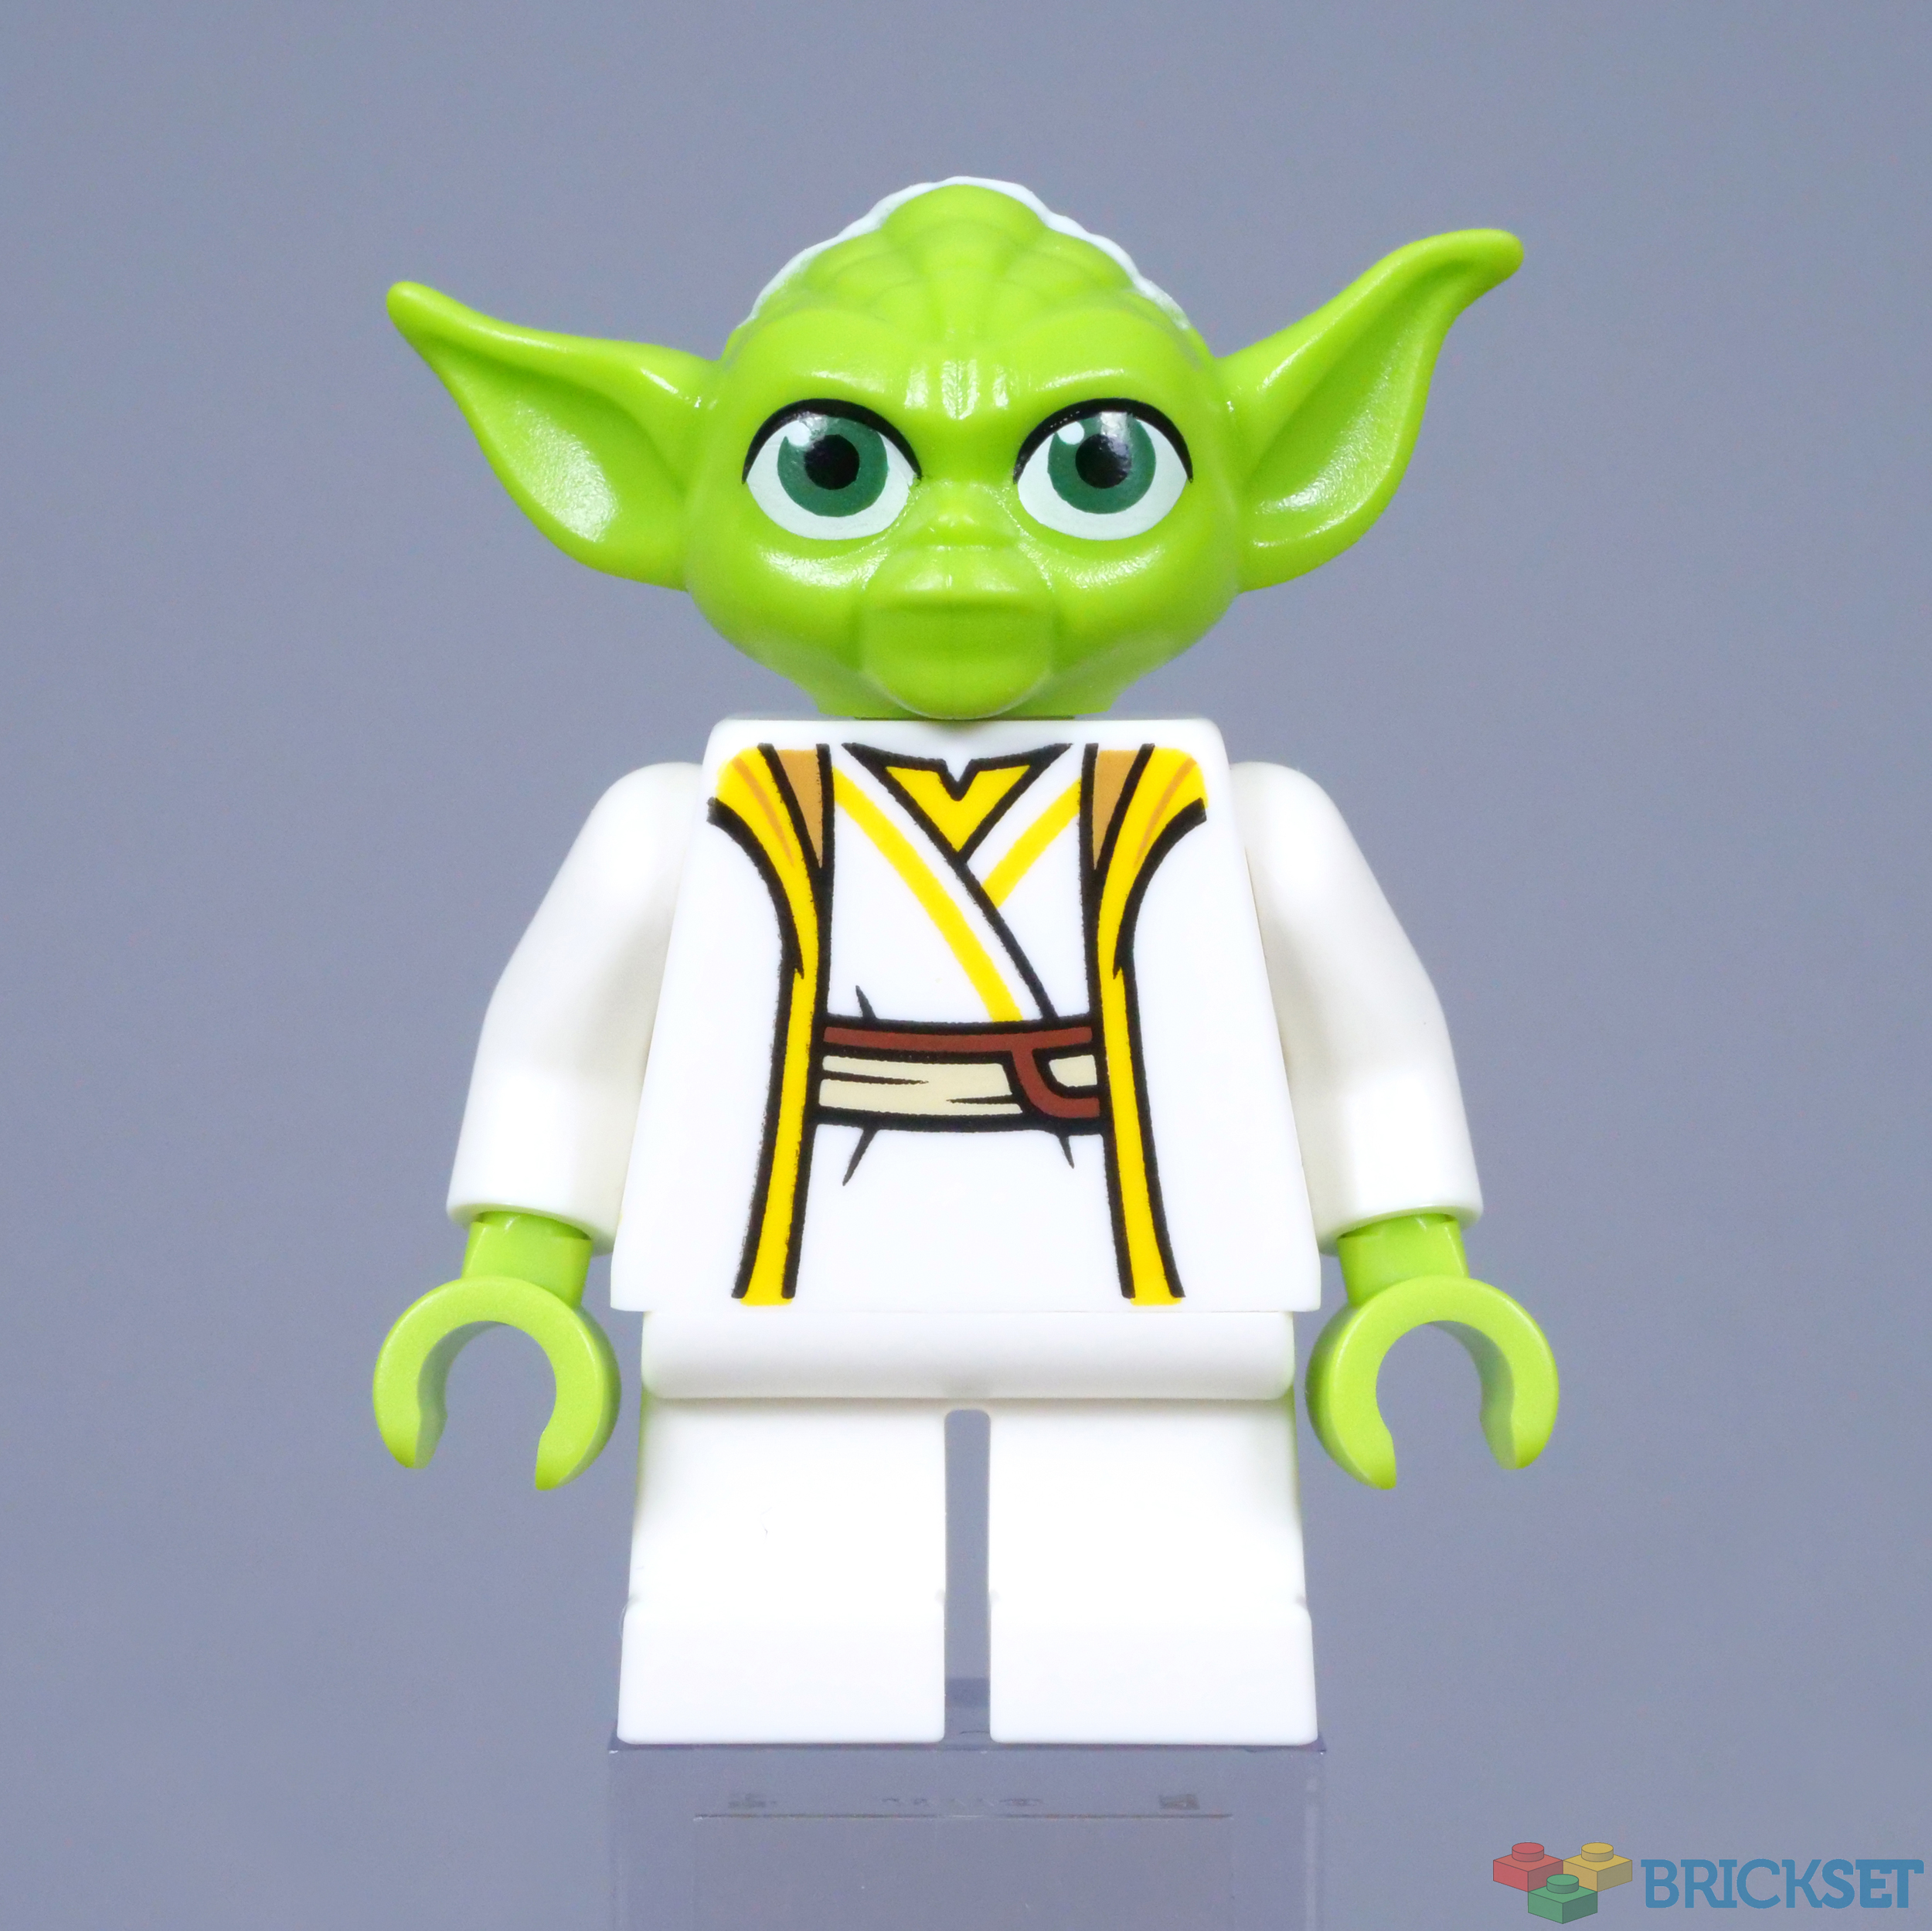 Lego Star Wars Yoda review